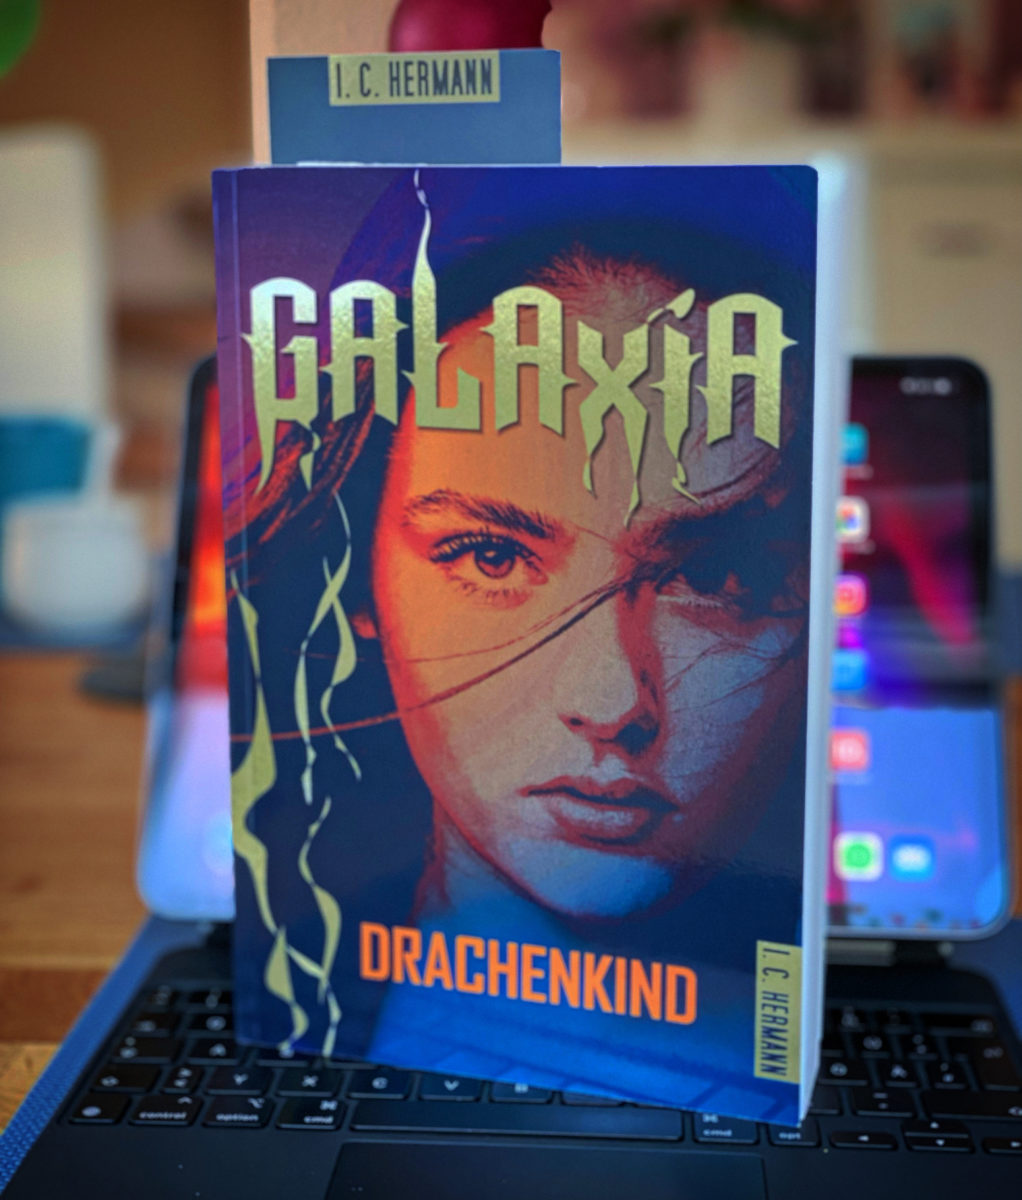 Review: I.C. Hermann Galaxia – Drachenkind